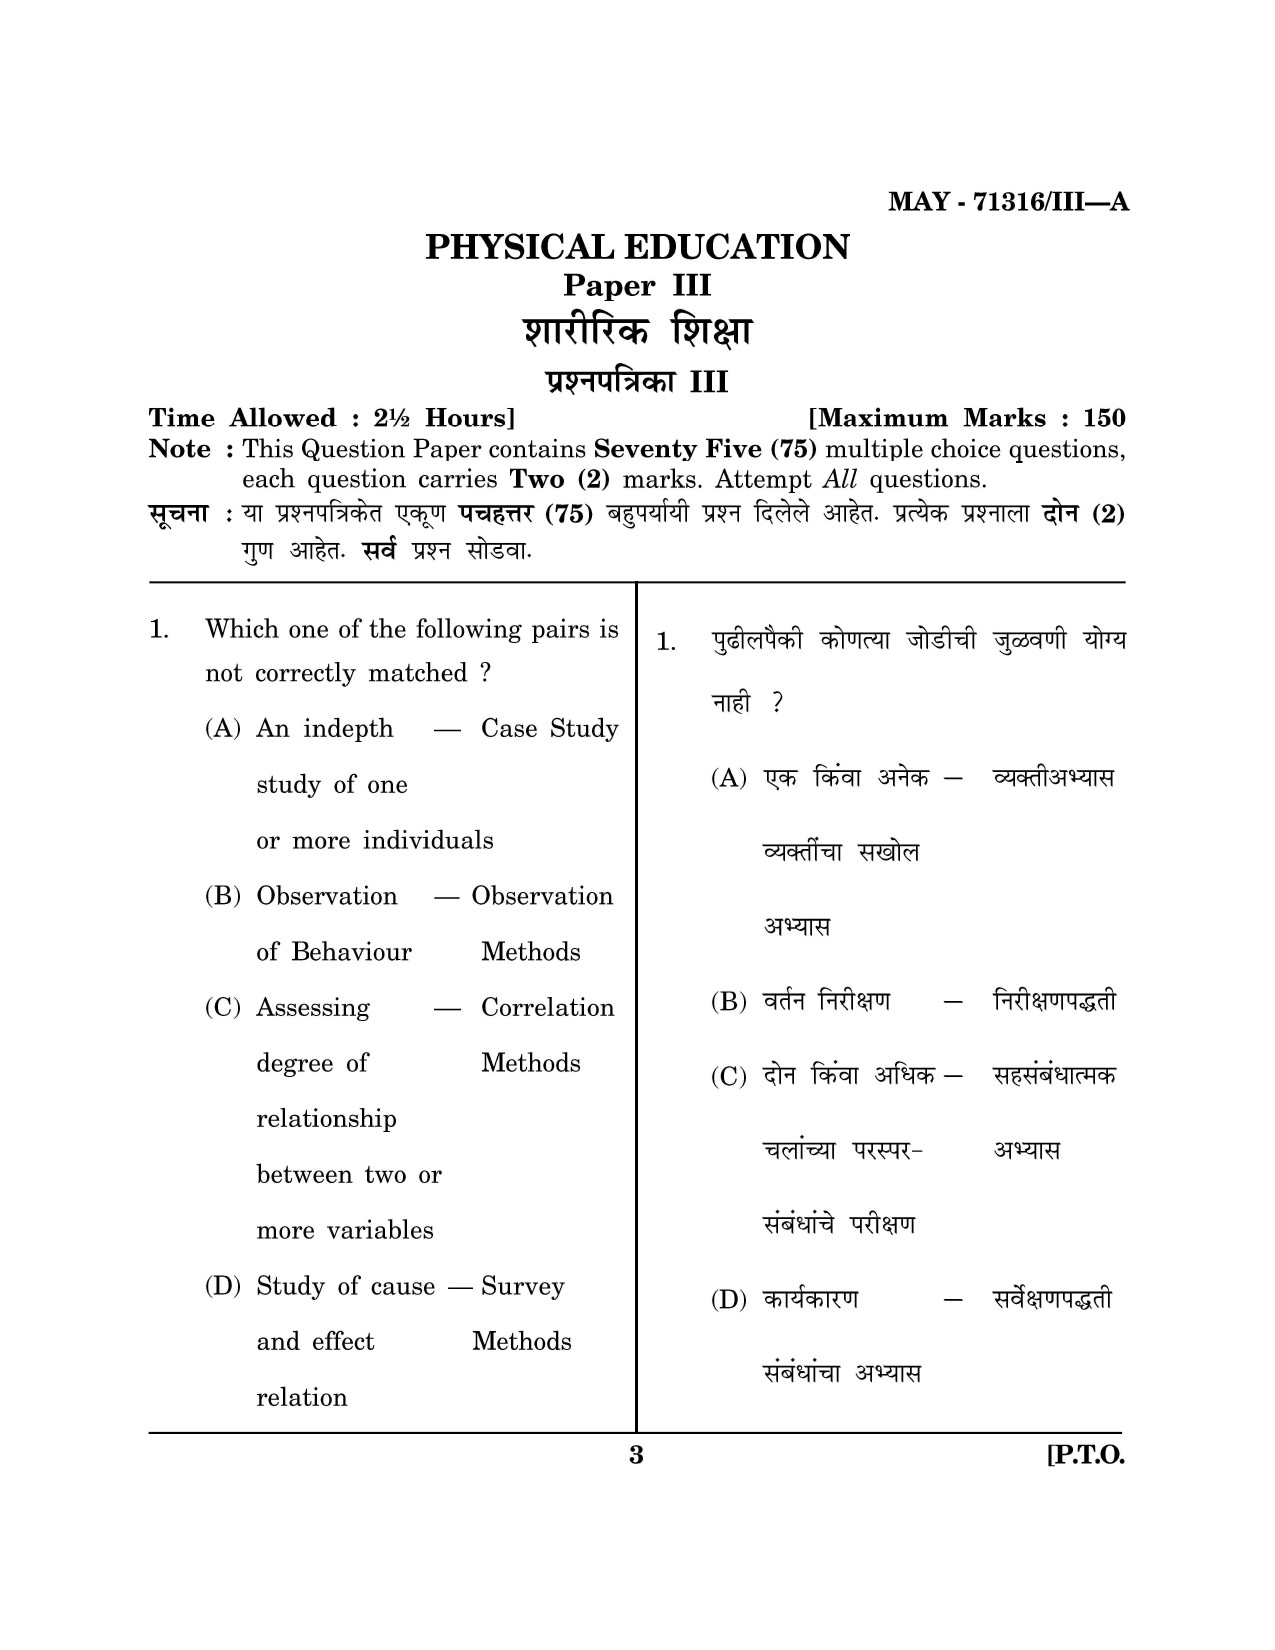 Maharashtra SET Physical Education Question Paper III May 2016 2